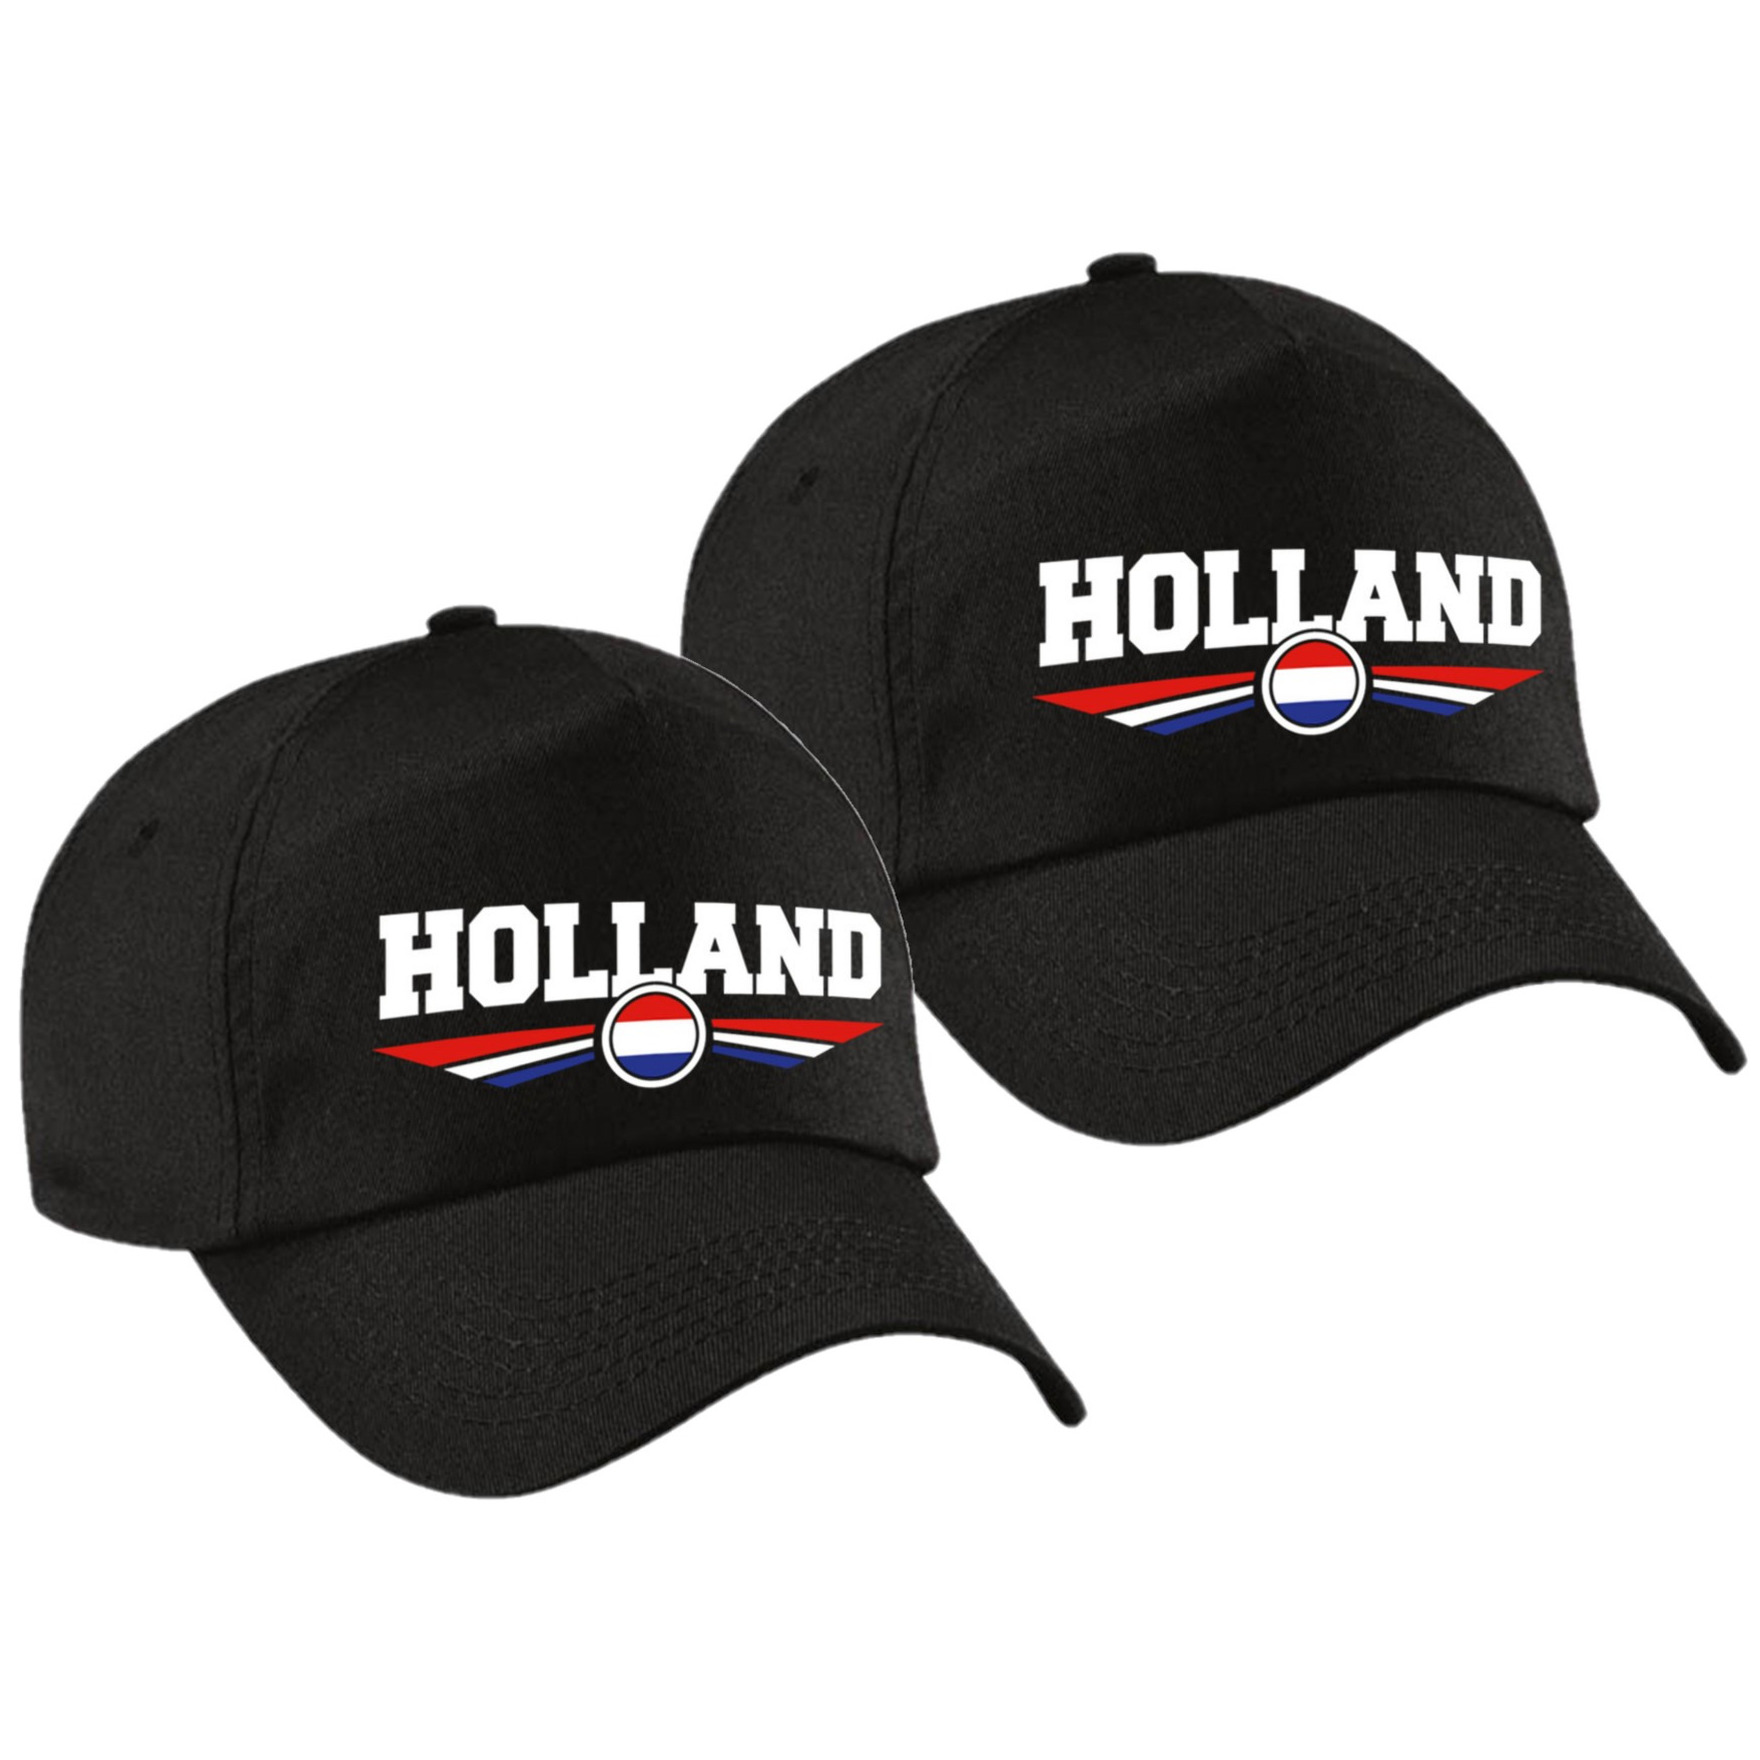 4x stuks nederland - Holland landen pet - baseball cap zwart kinderen